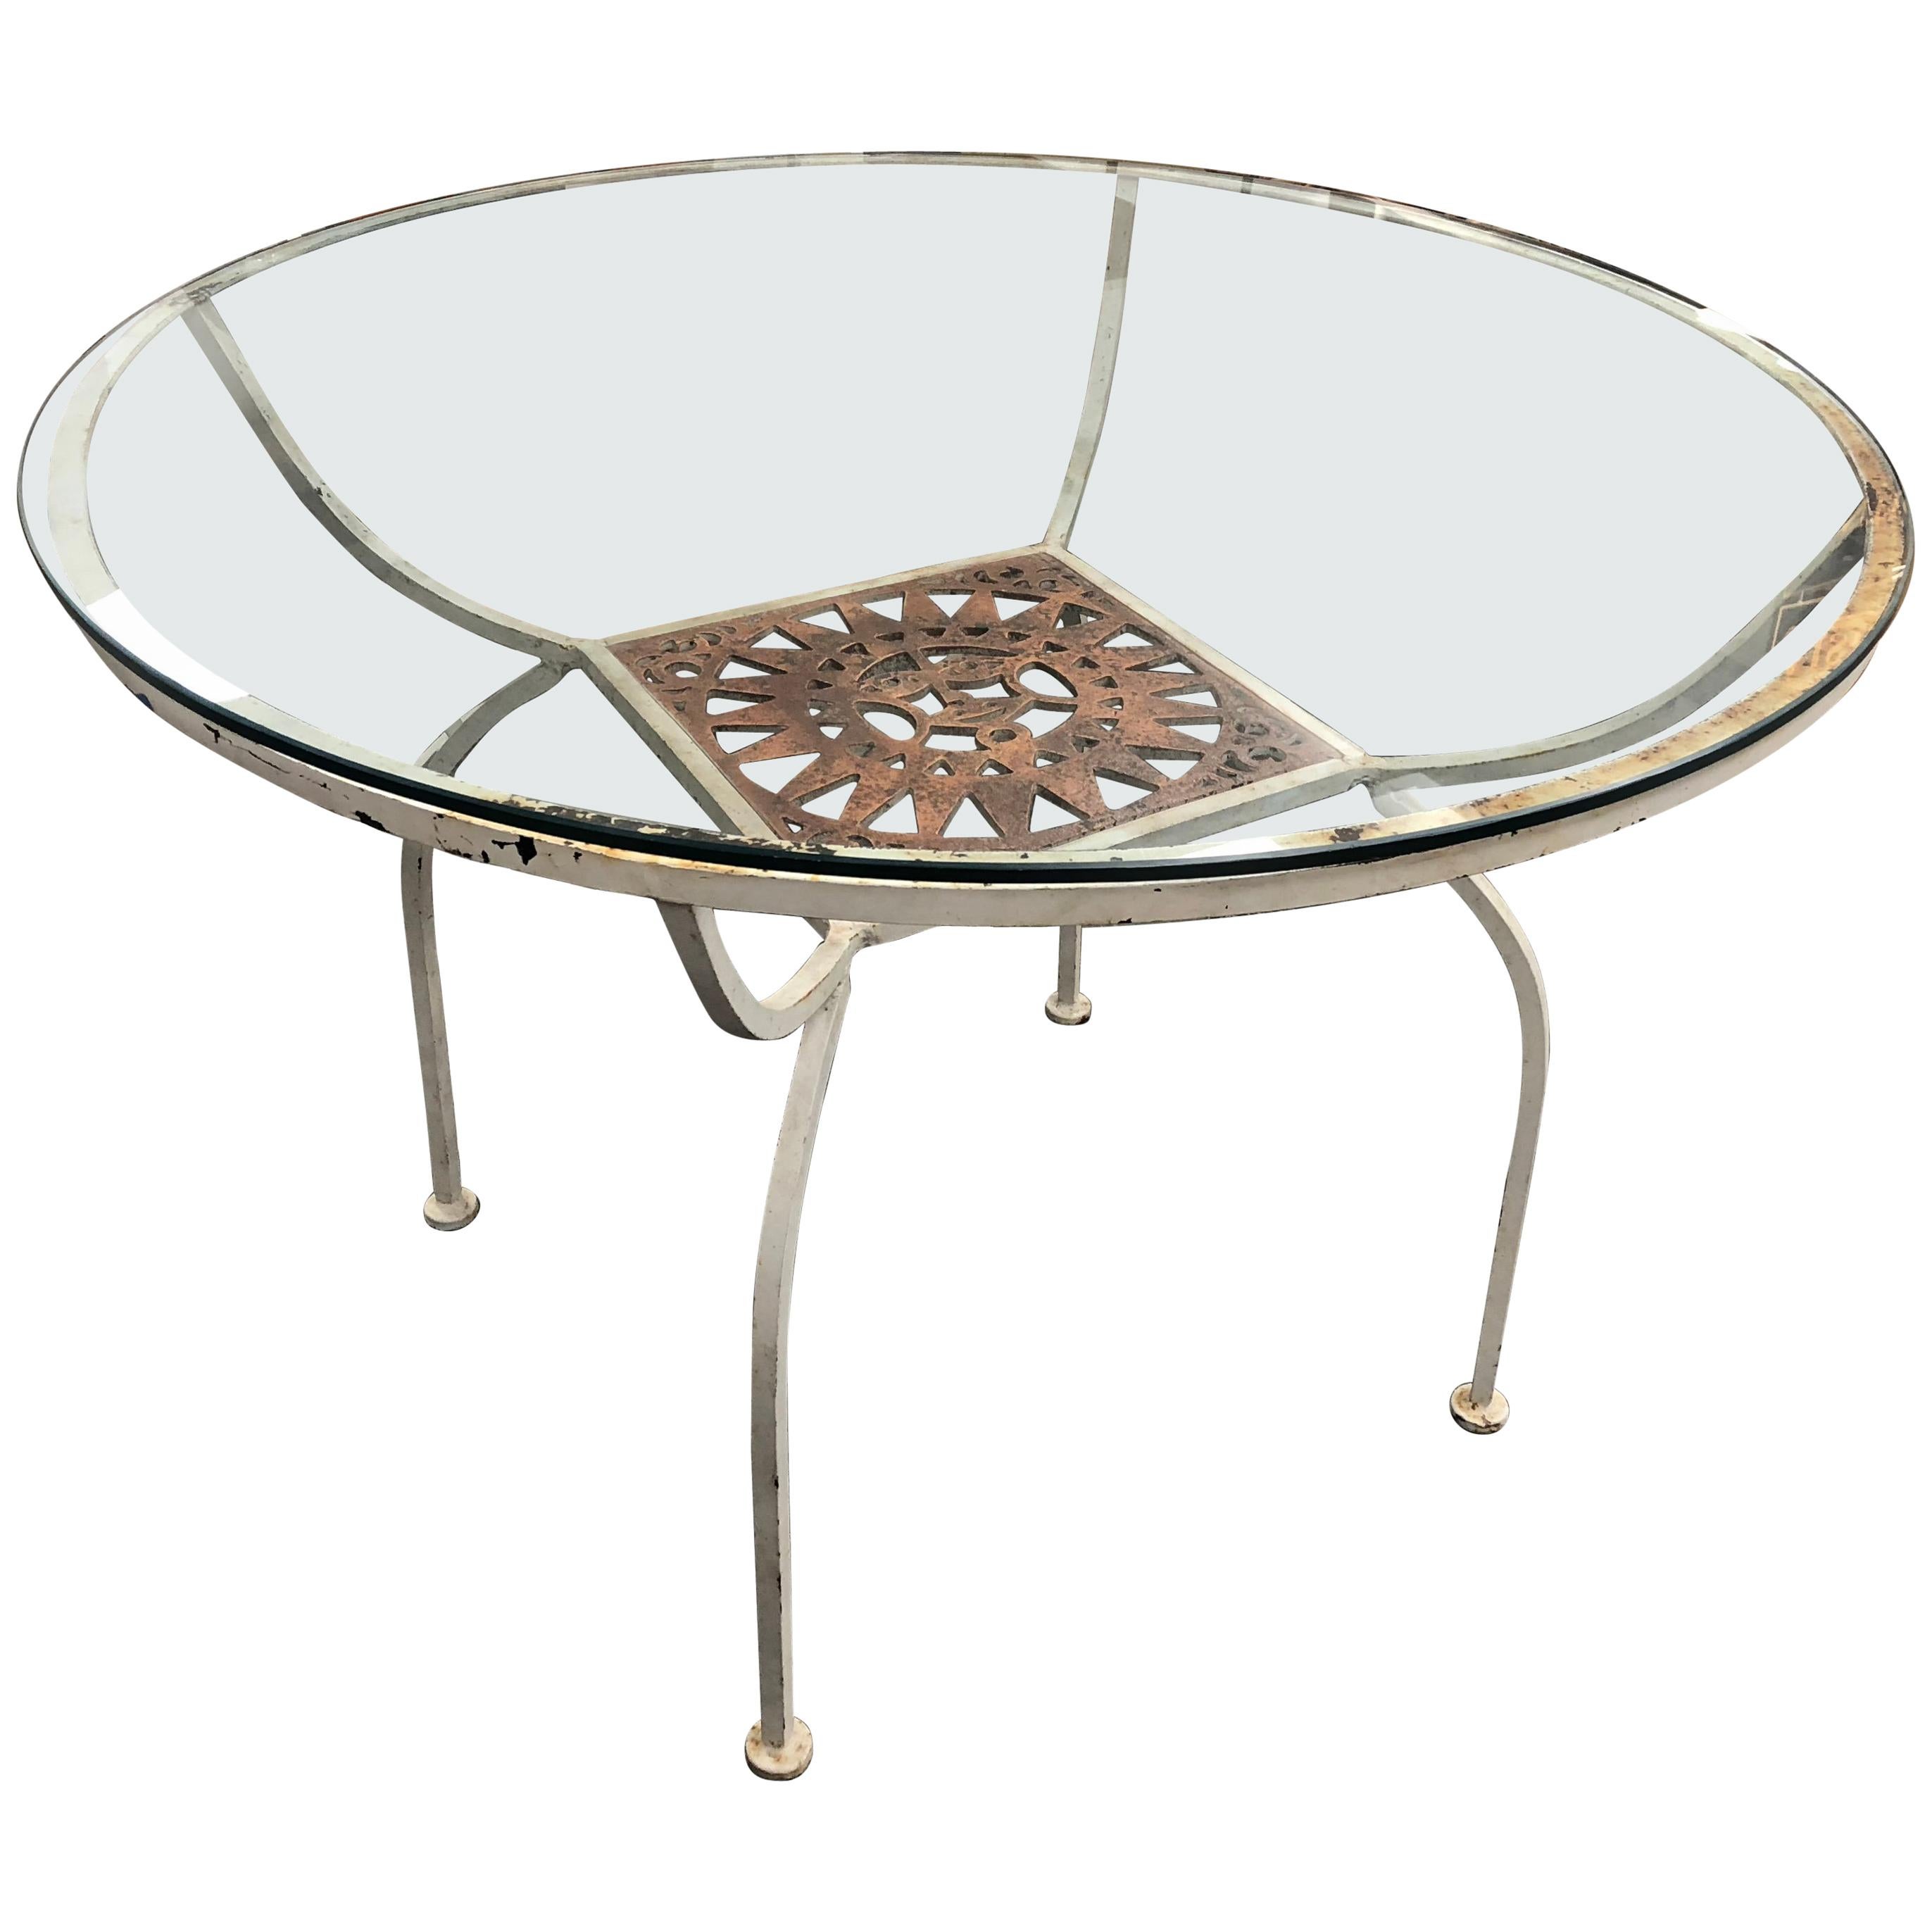 Midcentury Sunburst Wrought Iron Table by Umanoff For Sale